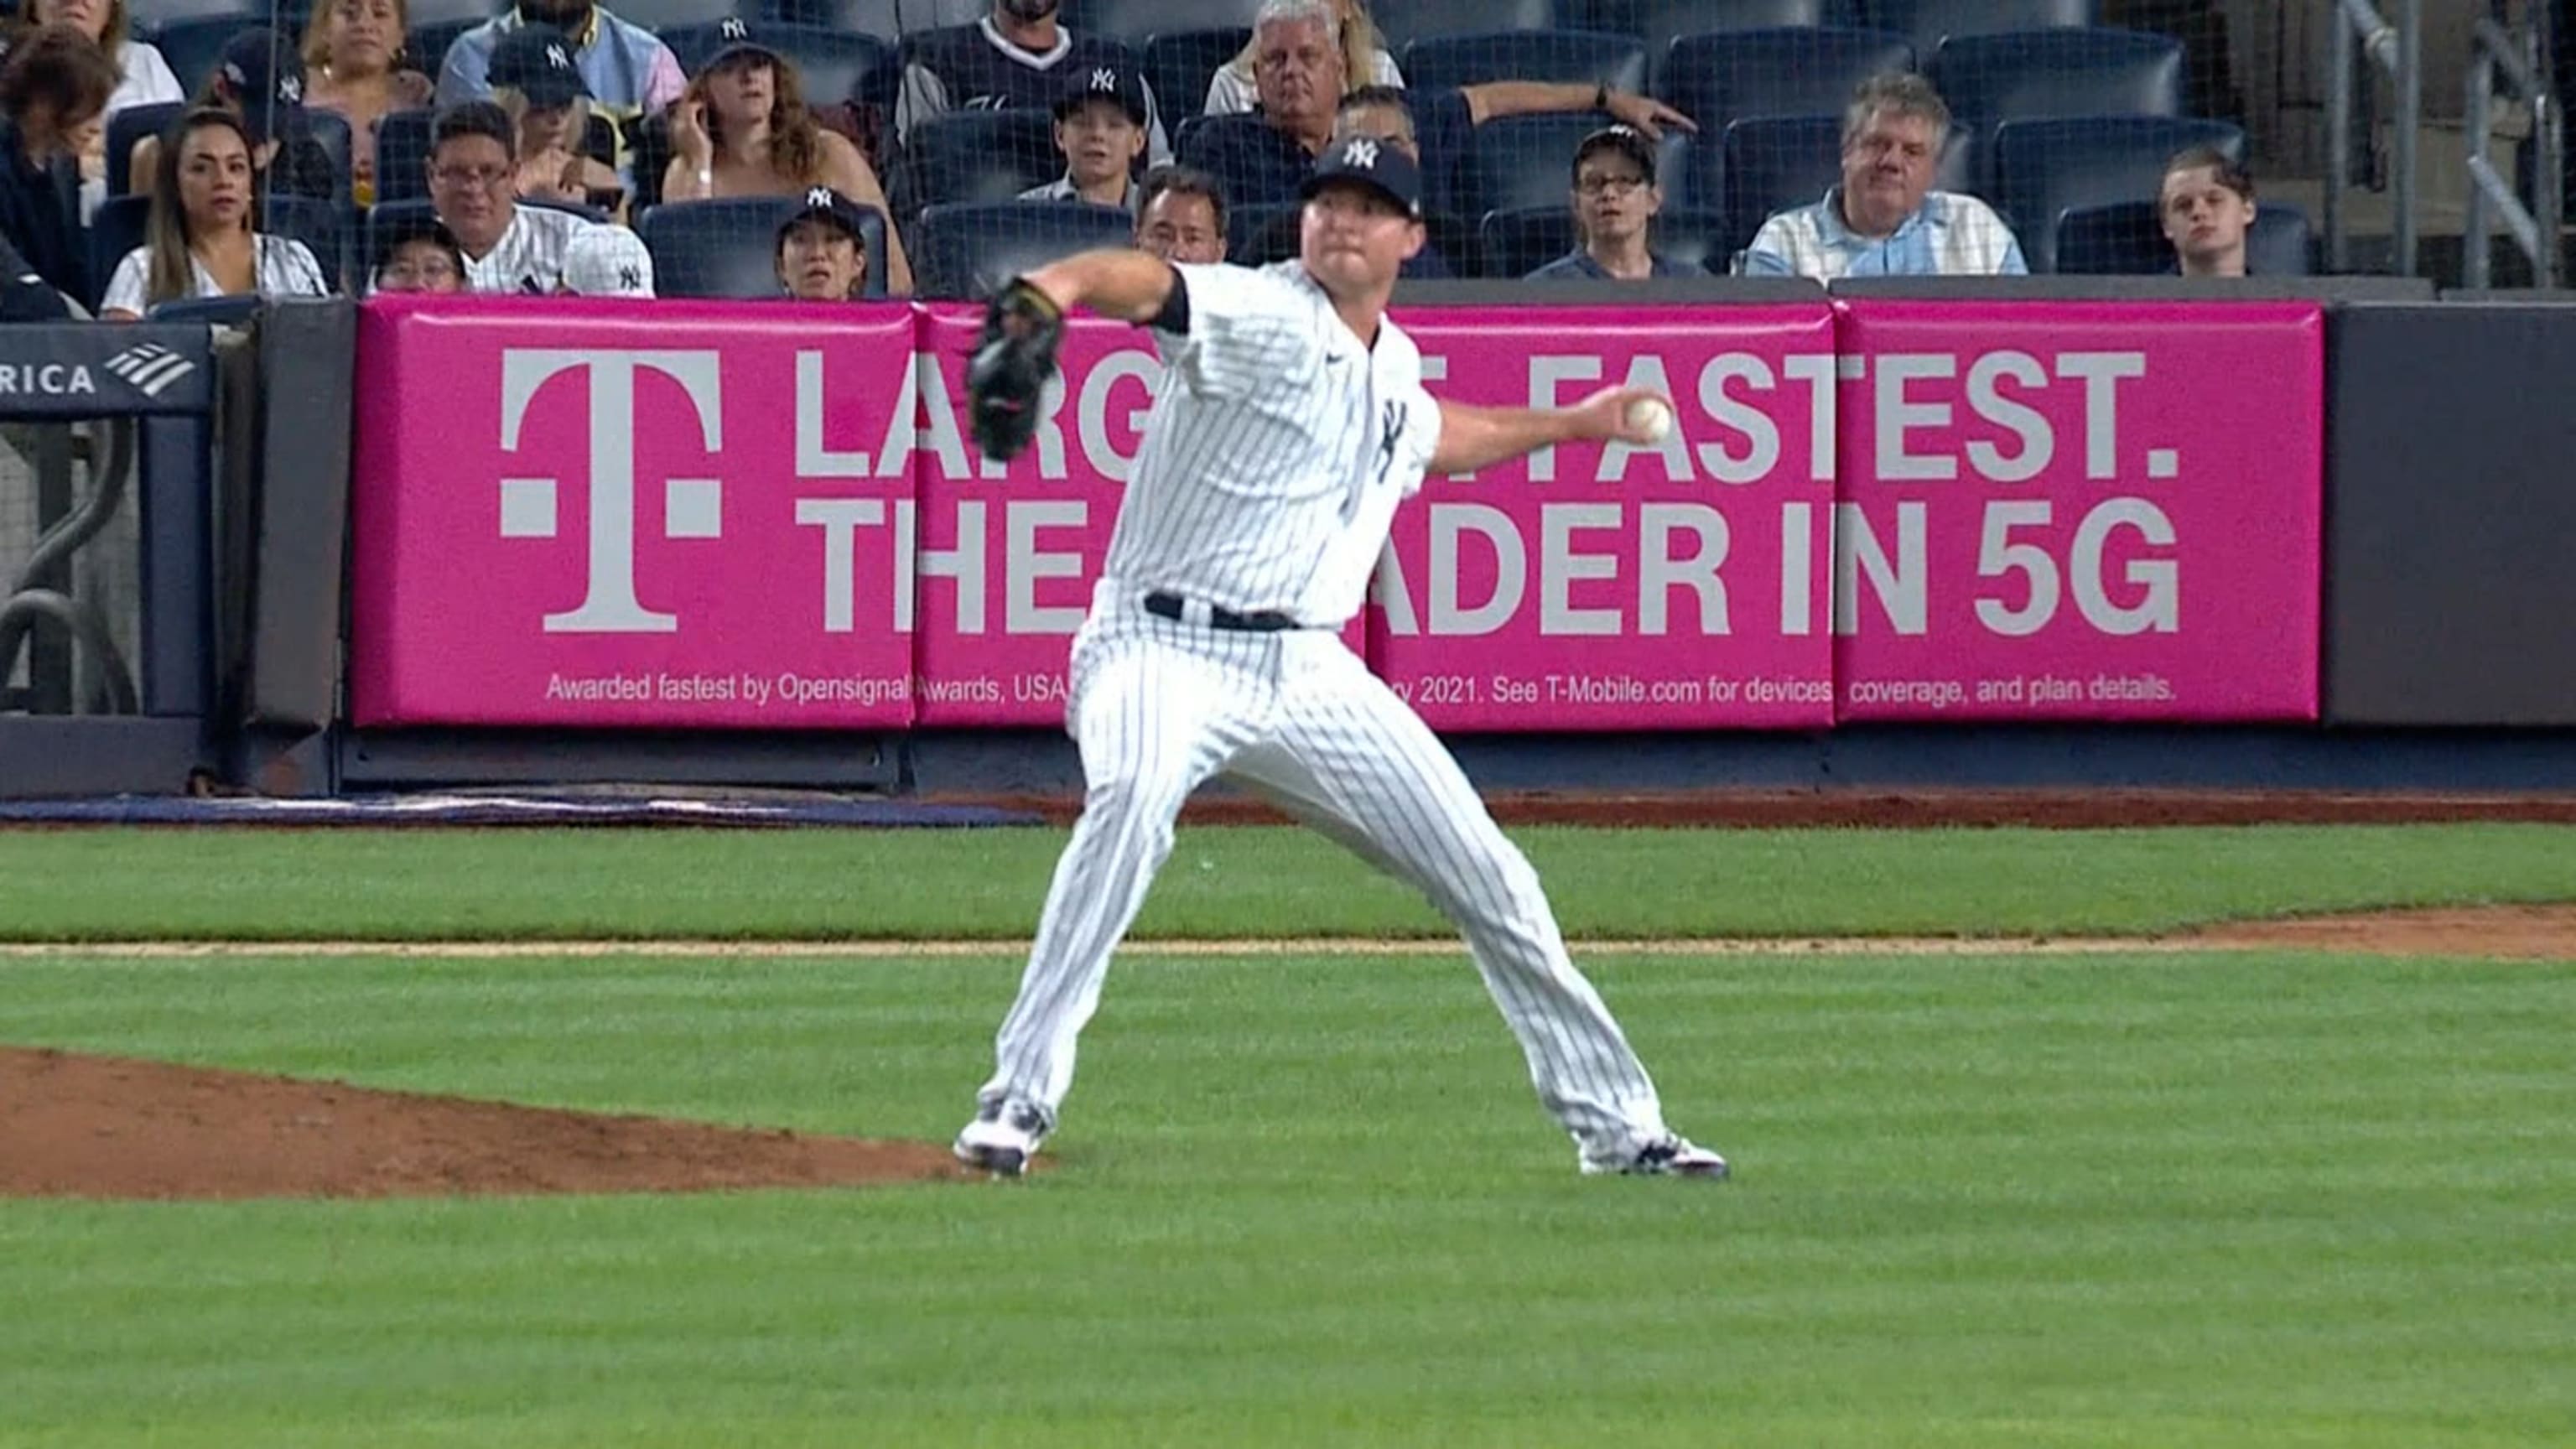 Bronx native Andrew Velazquez enjoys Yankees debut in KC